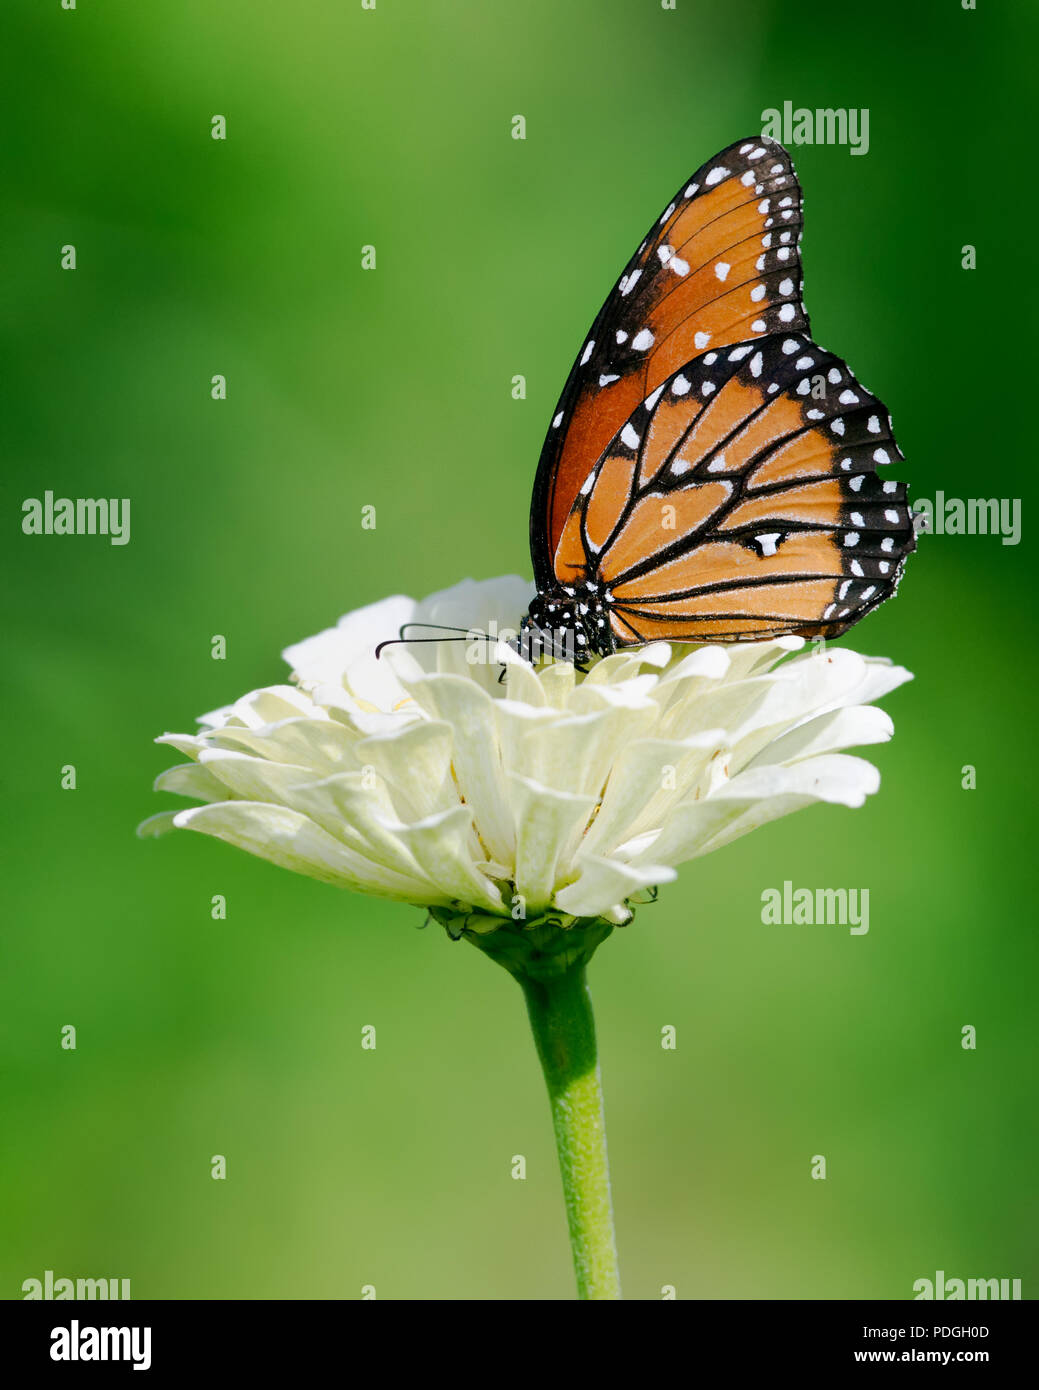 Queen Butterfly feeding on White Zinnia Flower Stock Photo